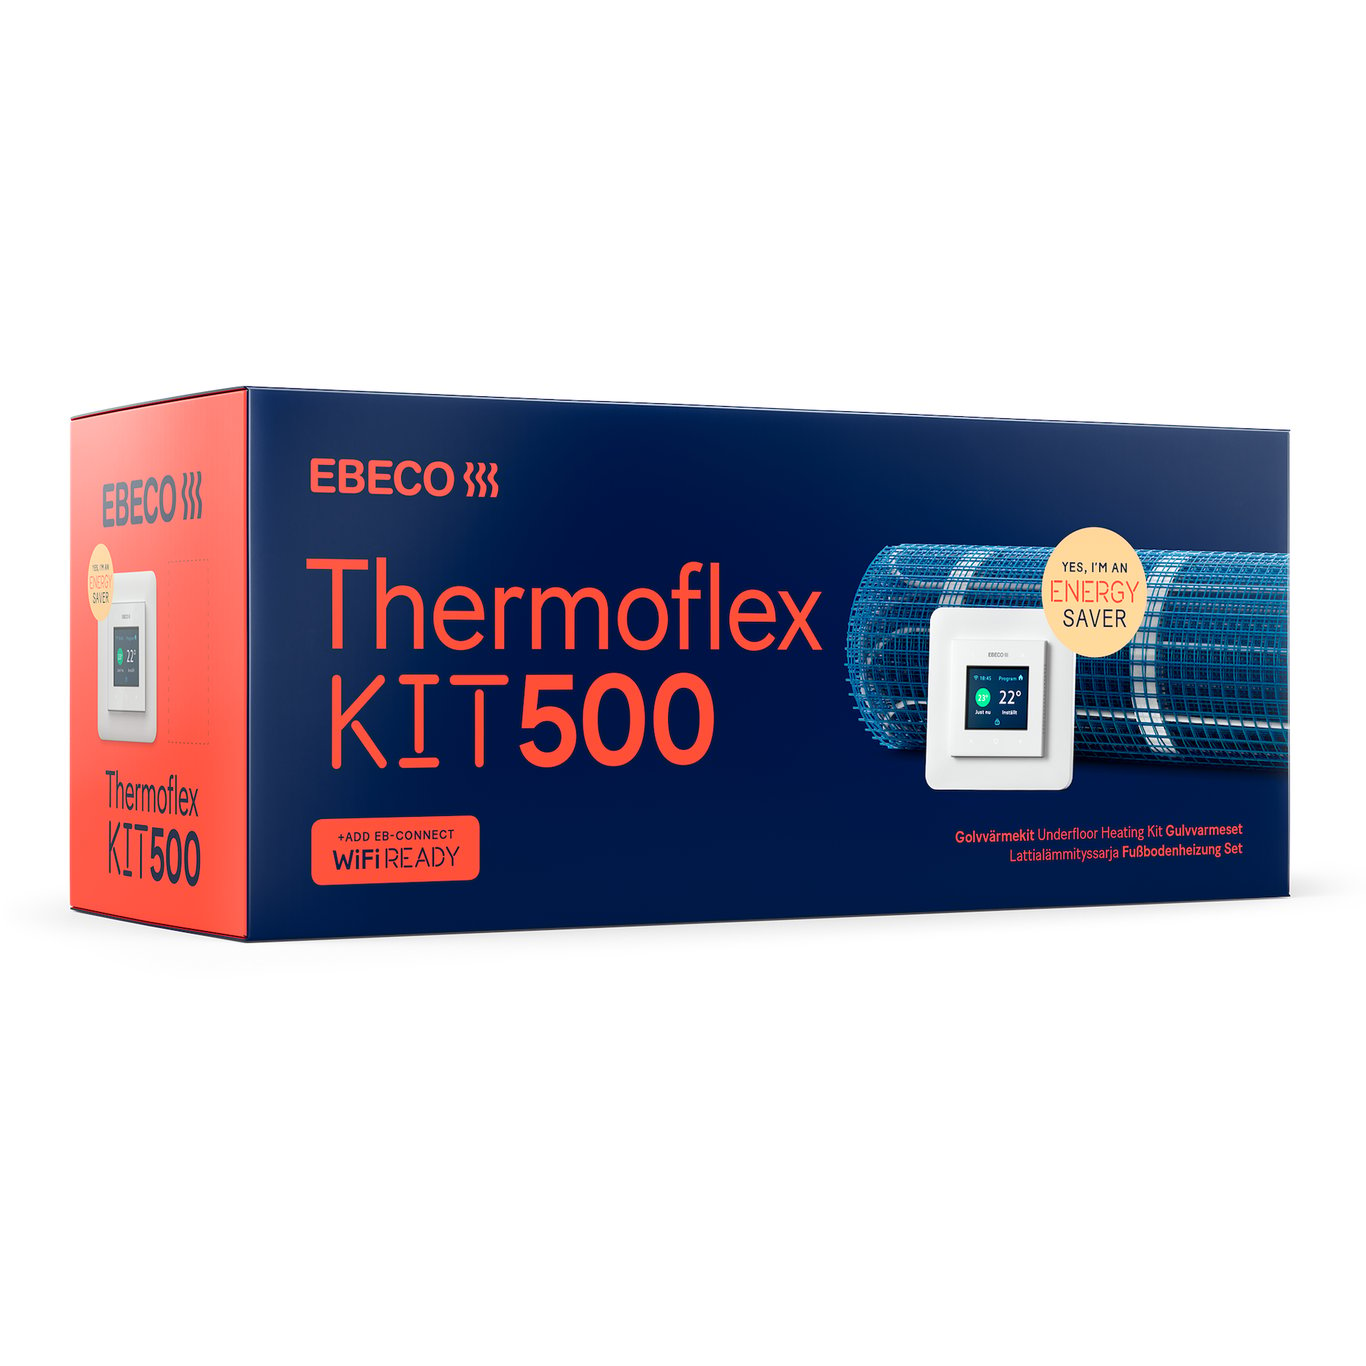 EBECO THERMOFLEX KIT 500 5,4M2 640W